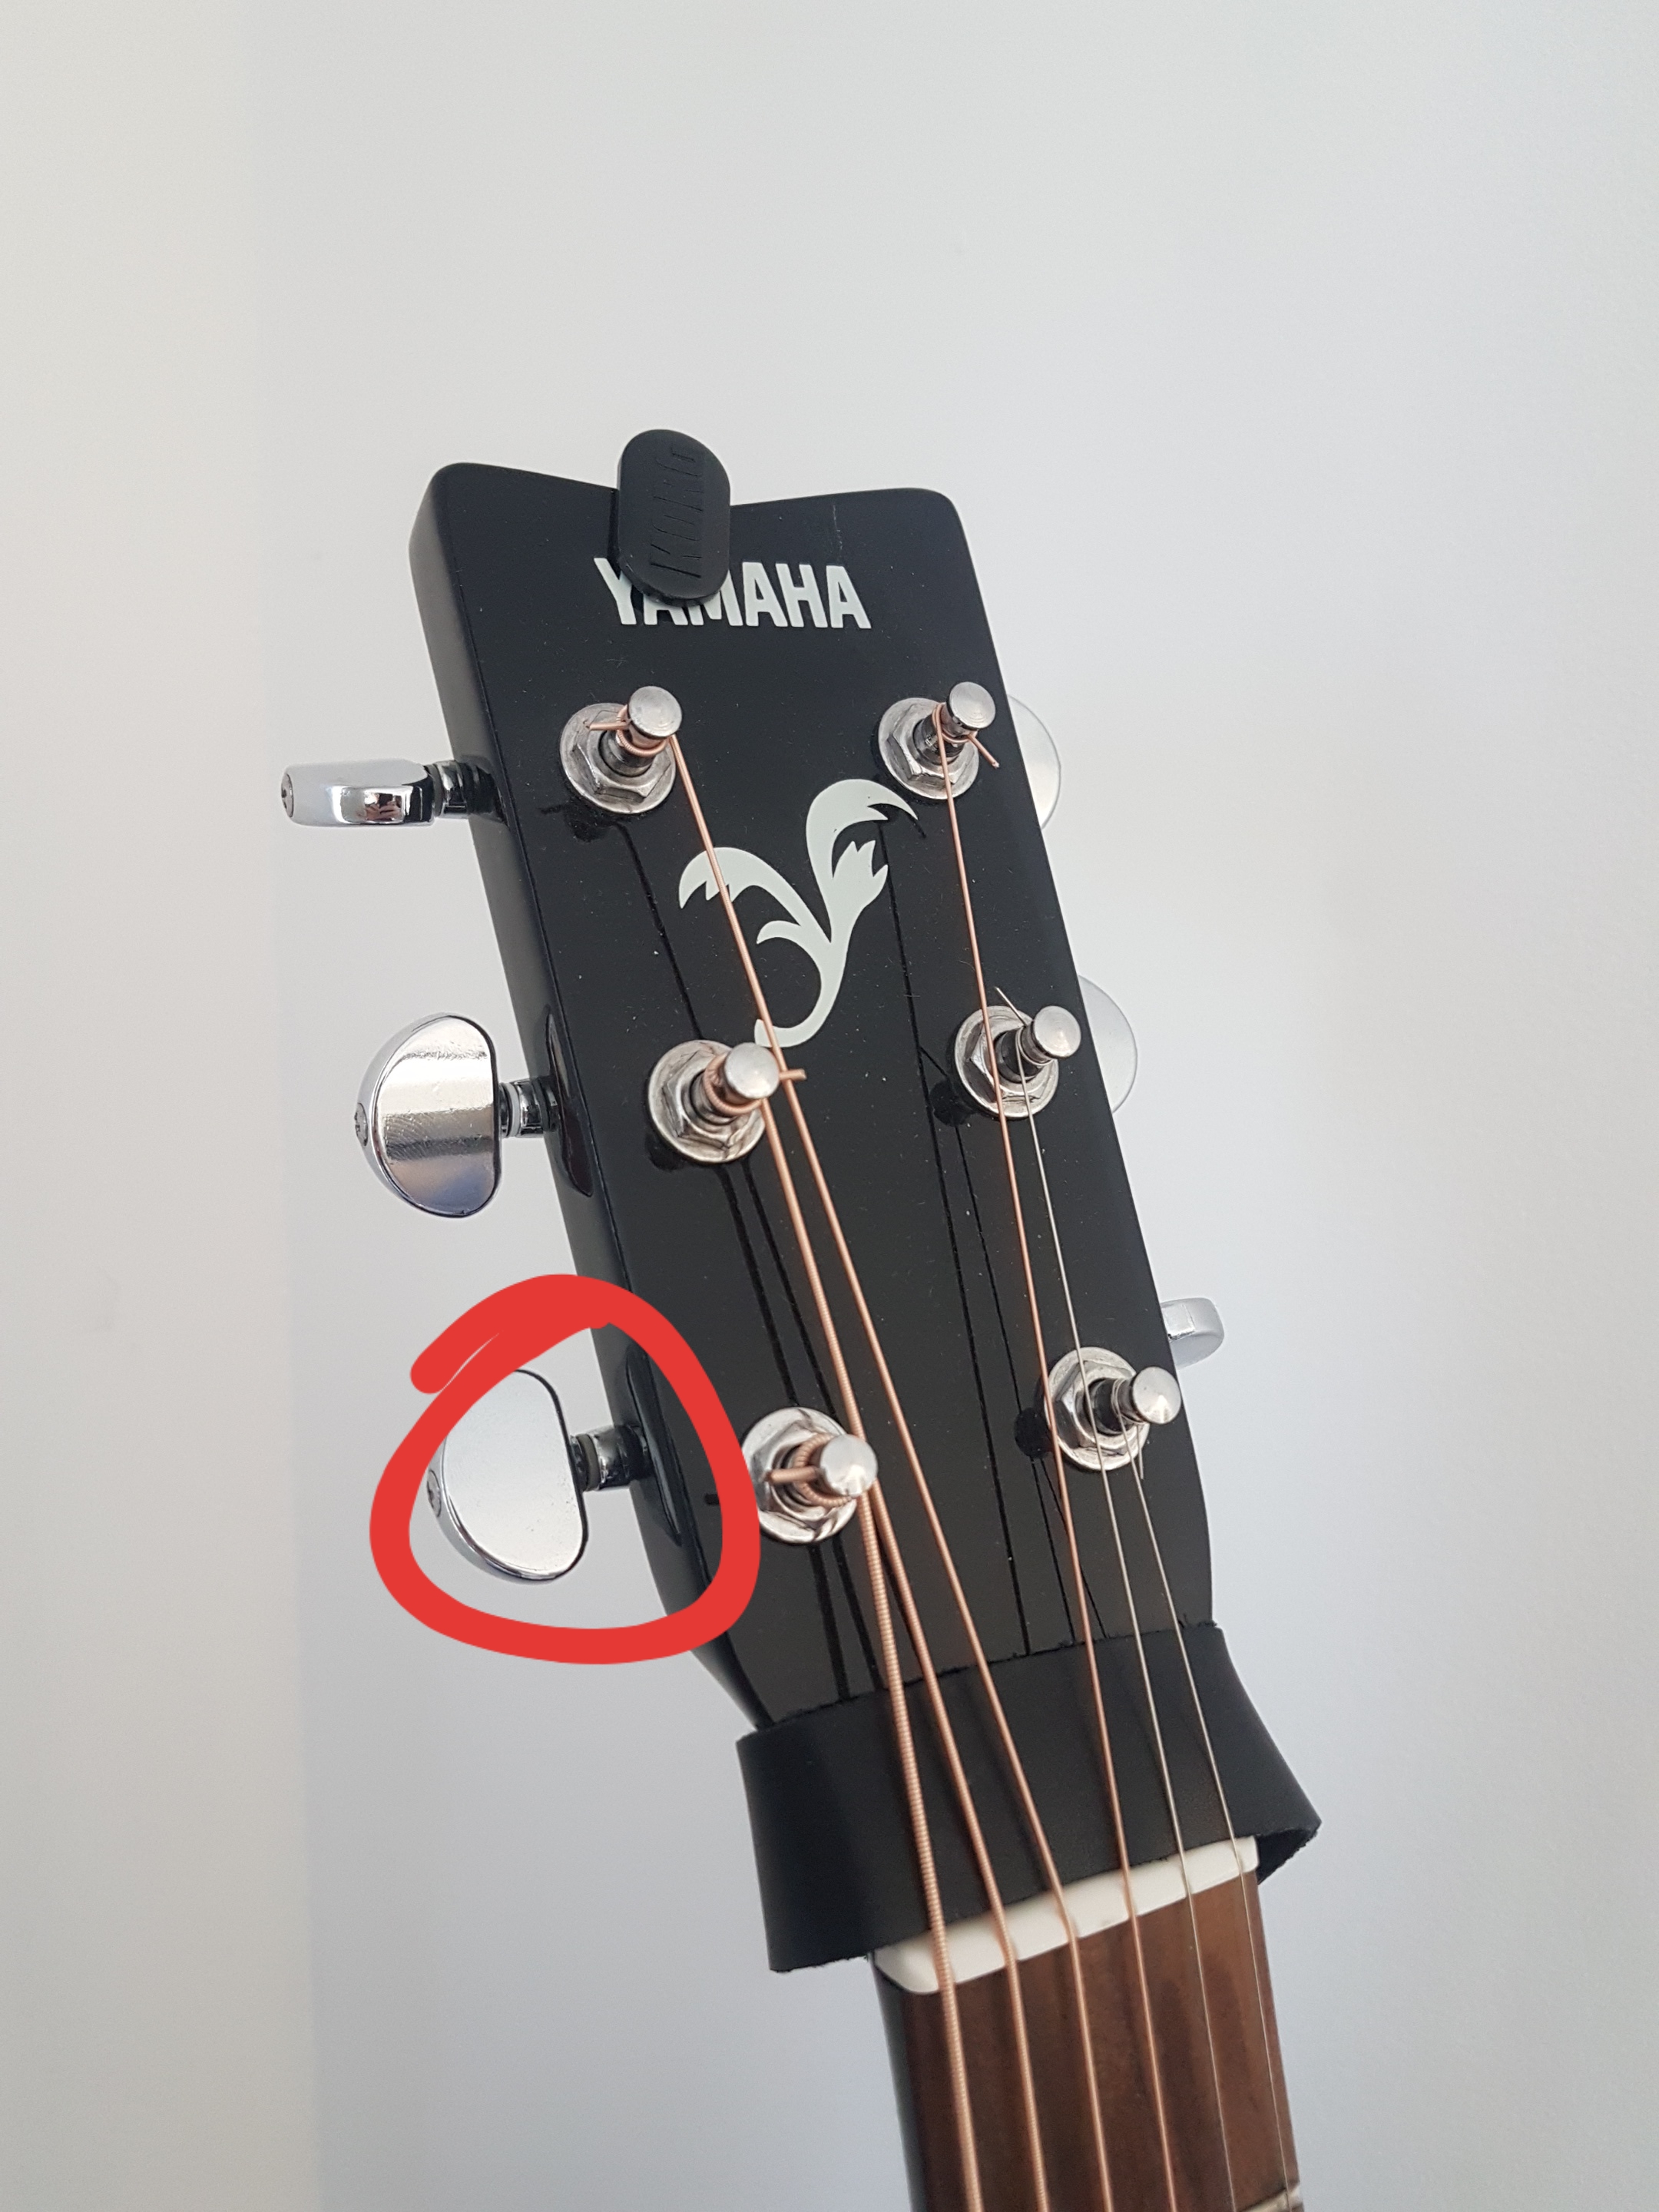 Washer for Yamaha Guitar Tuner Mechanism